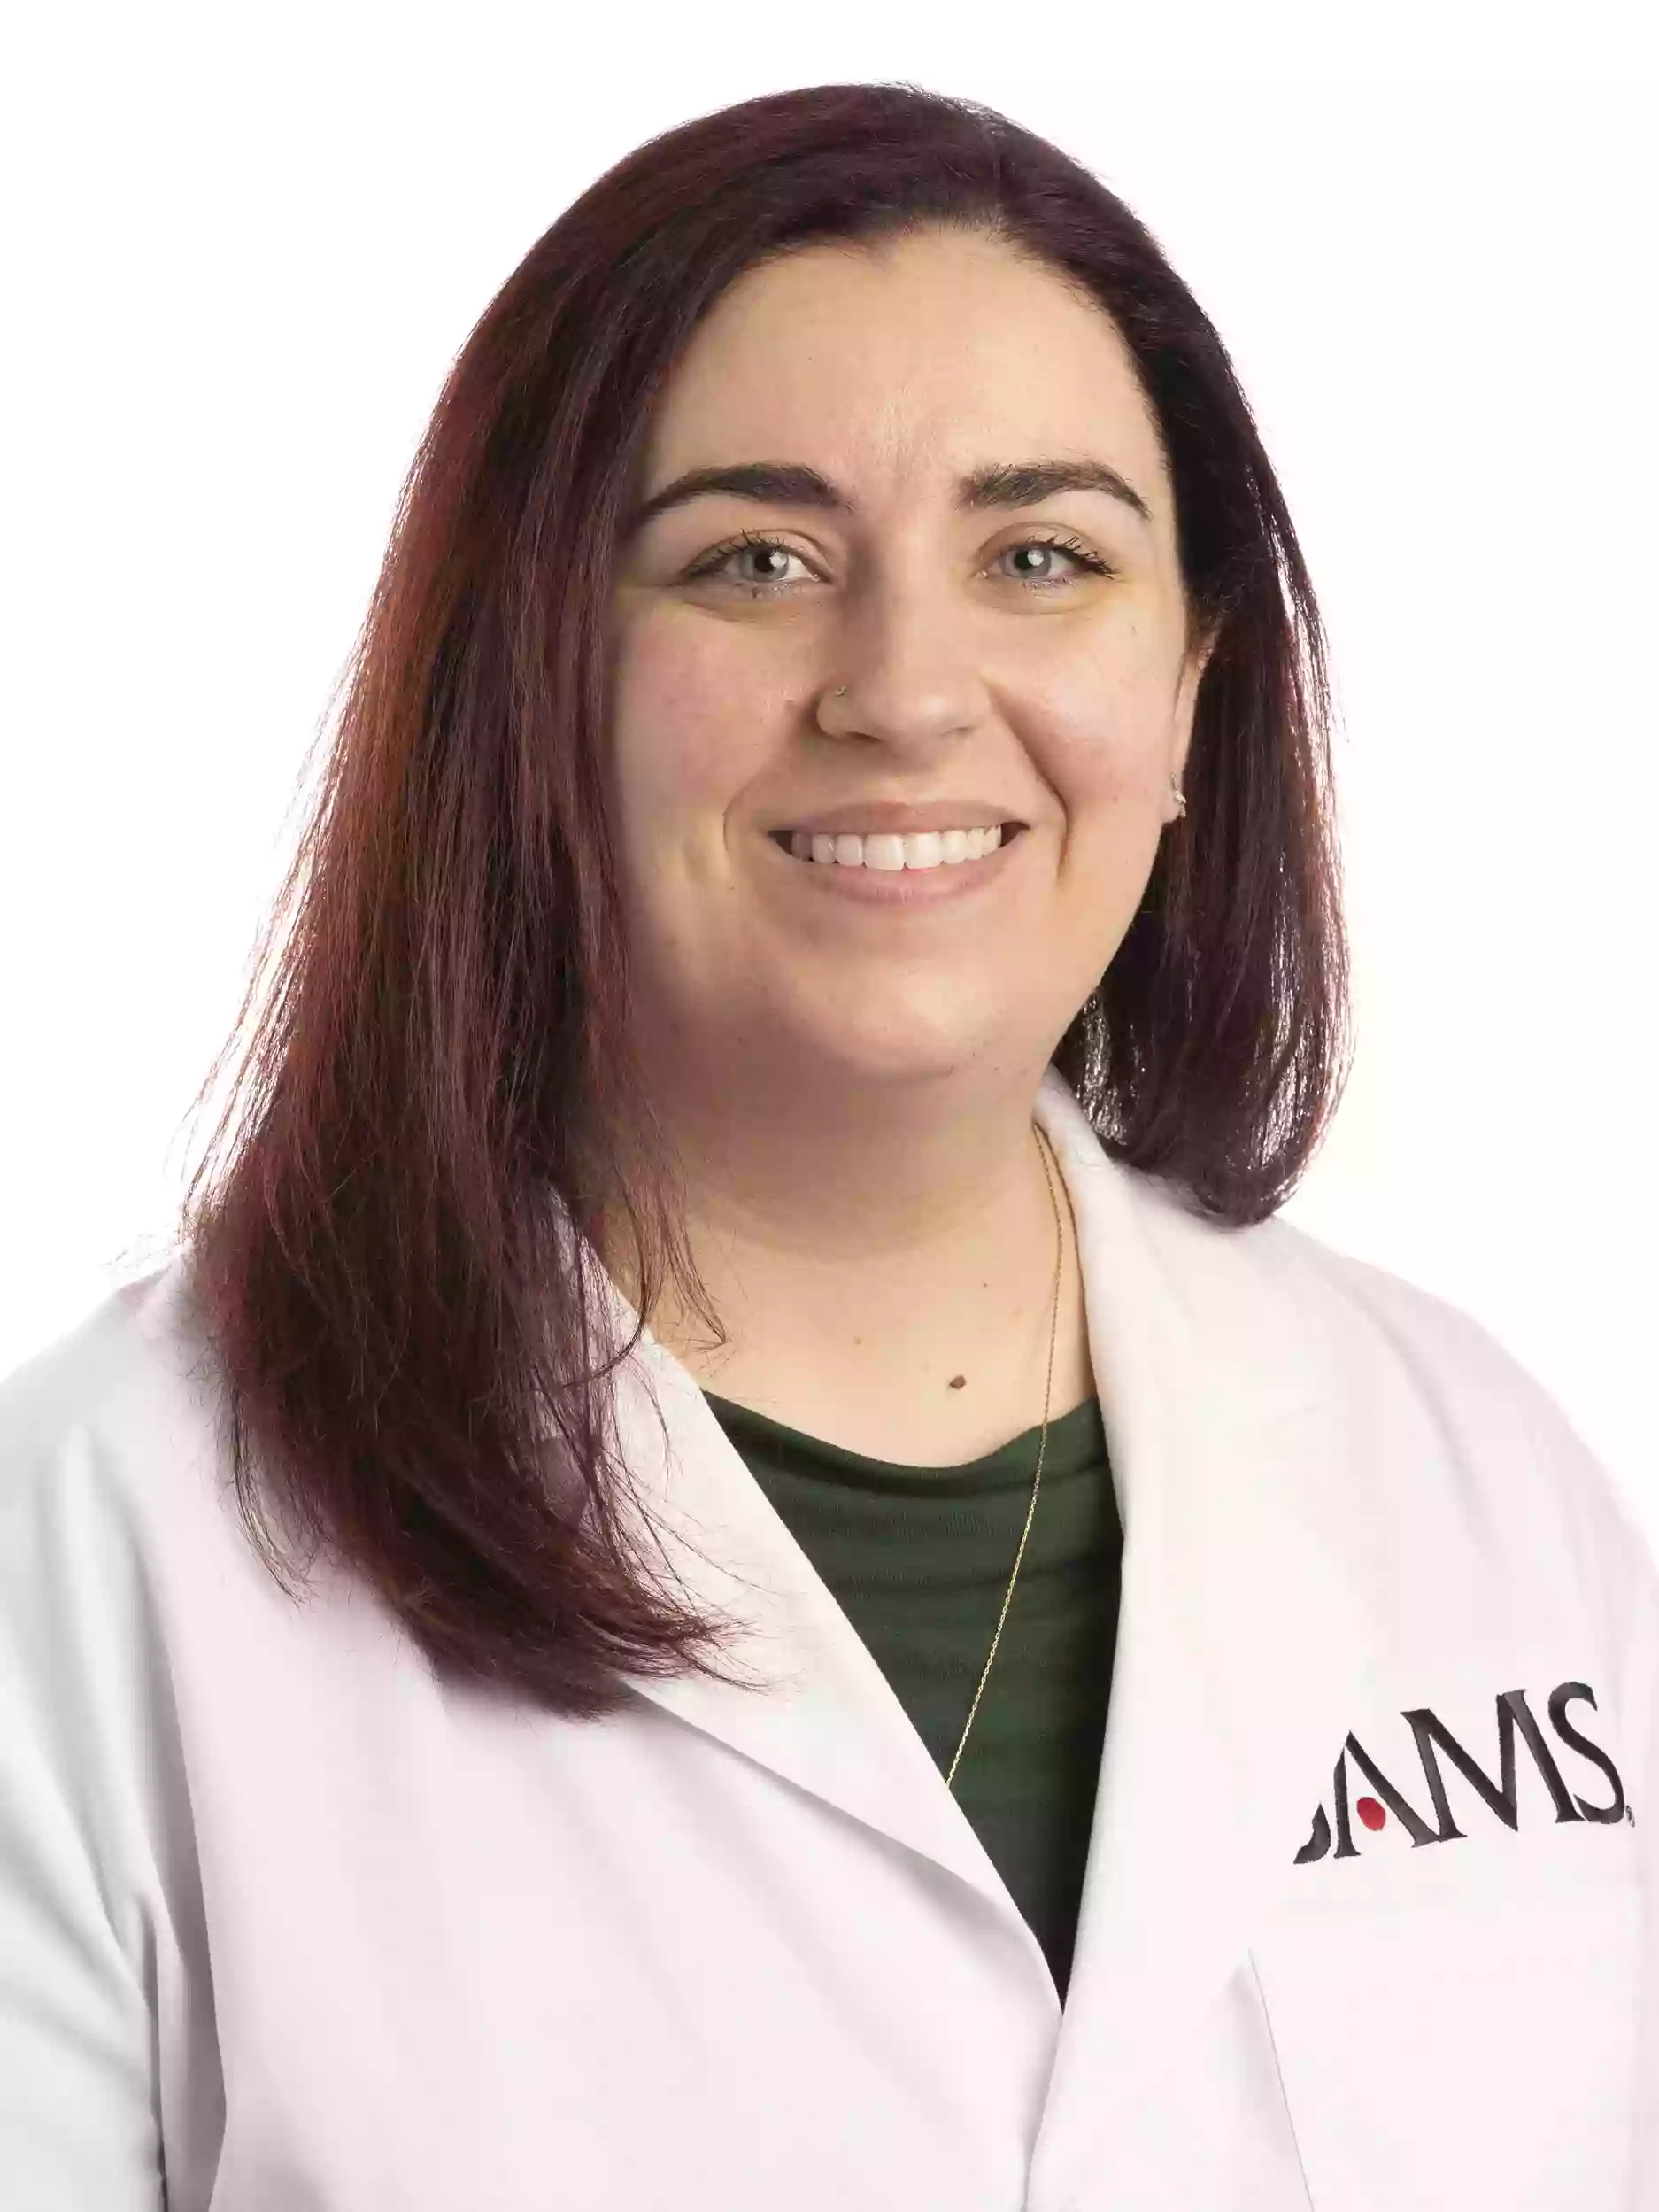 UAMS Health - Melissa J. Zielinski, Ph.D.